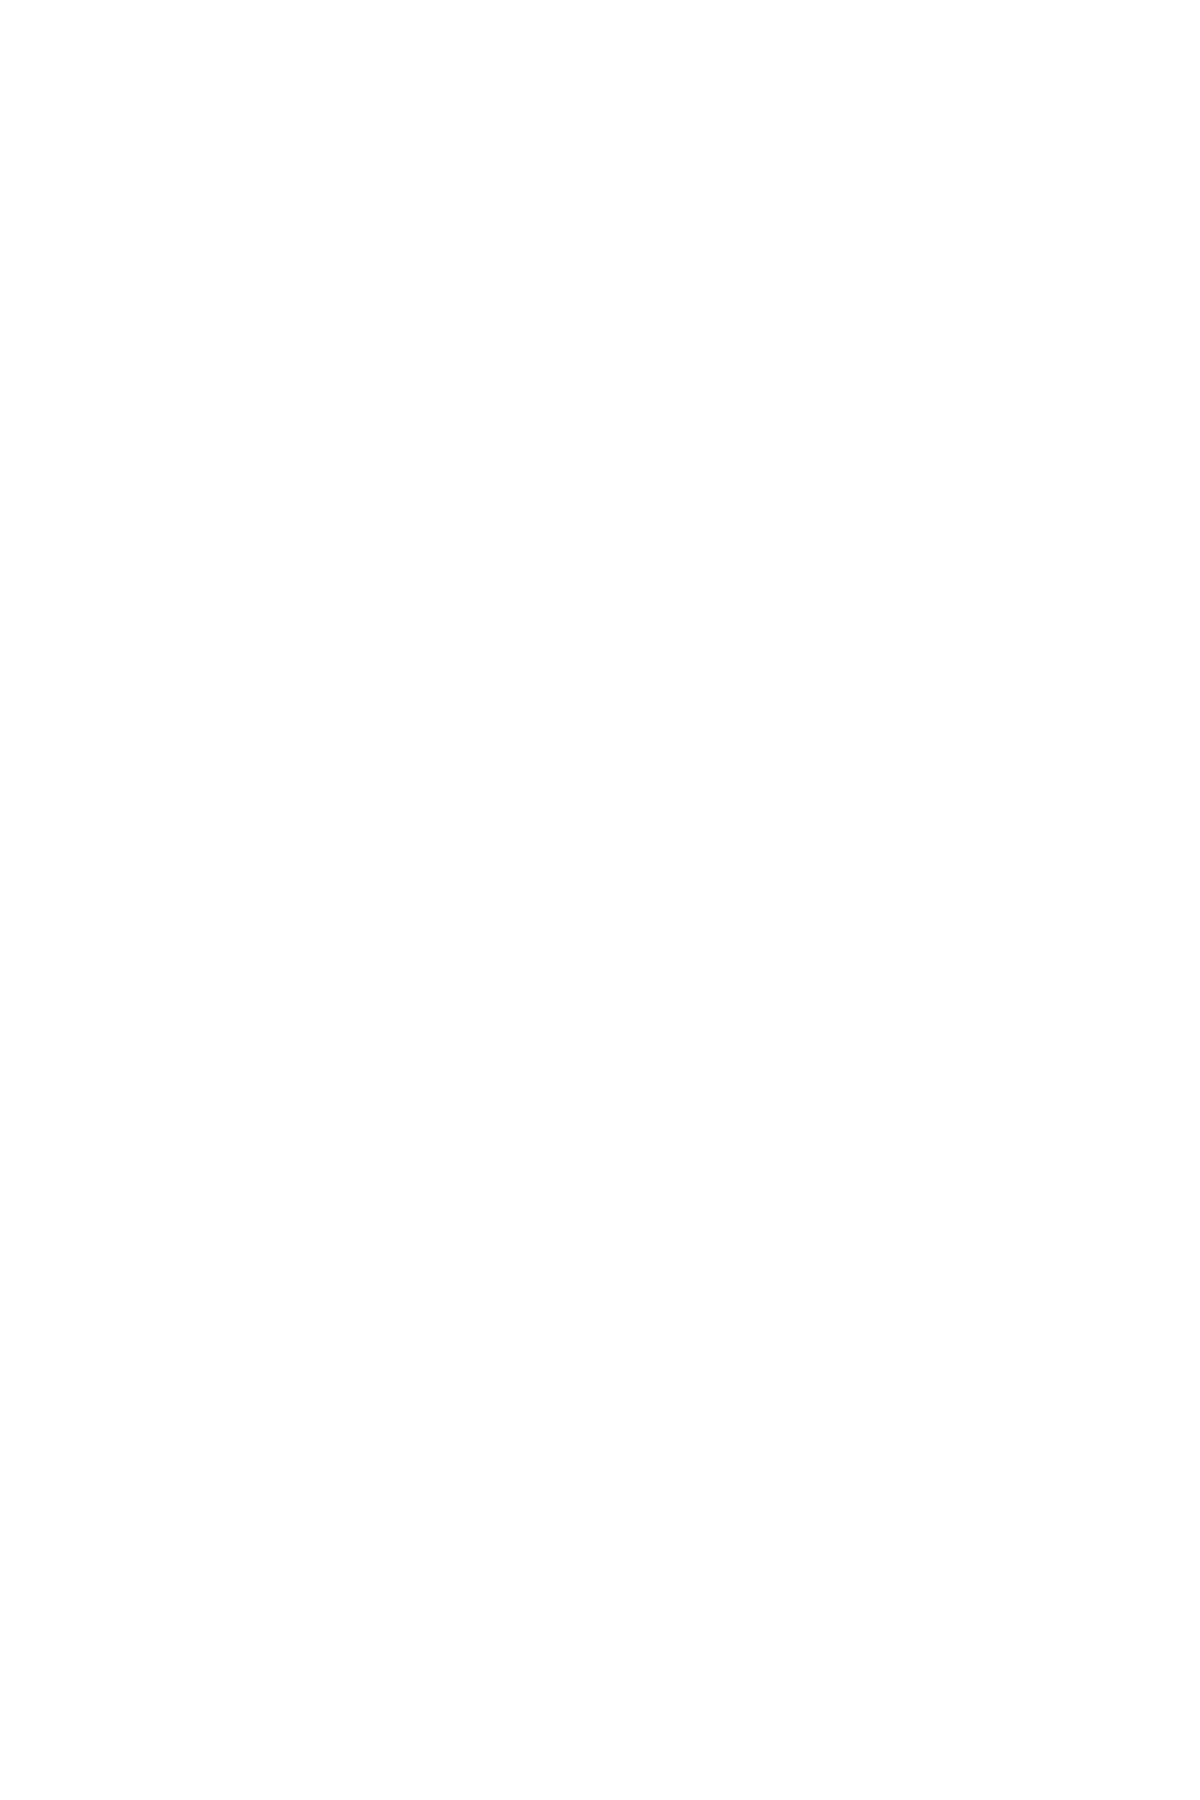 PRIMART Feature PLAN BOOK 開発秘話 ミニマルな美しさと機能性を追求したトラックデイリーサプライズ第一弾・PLAN・BOOKの開発秘話